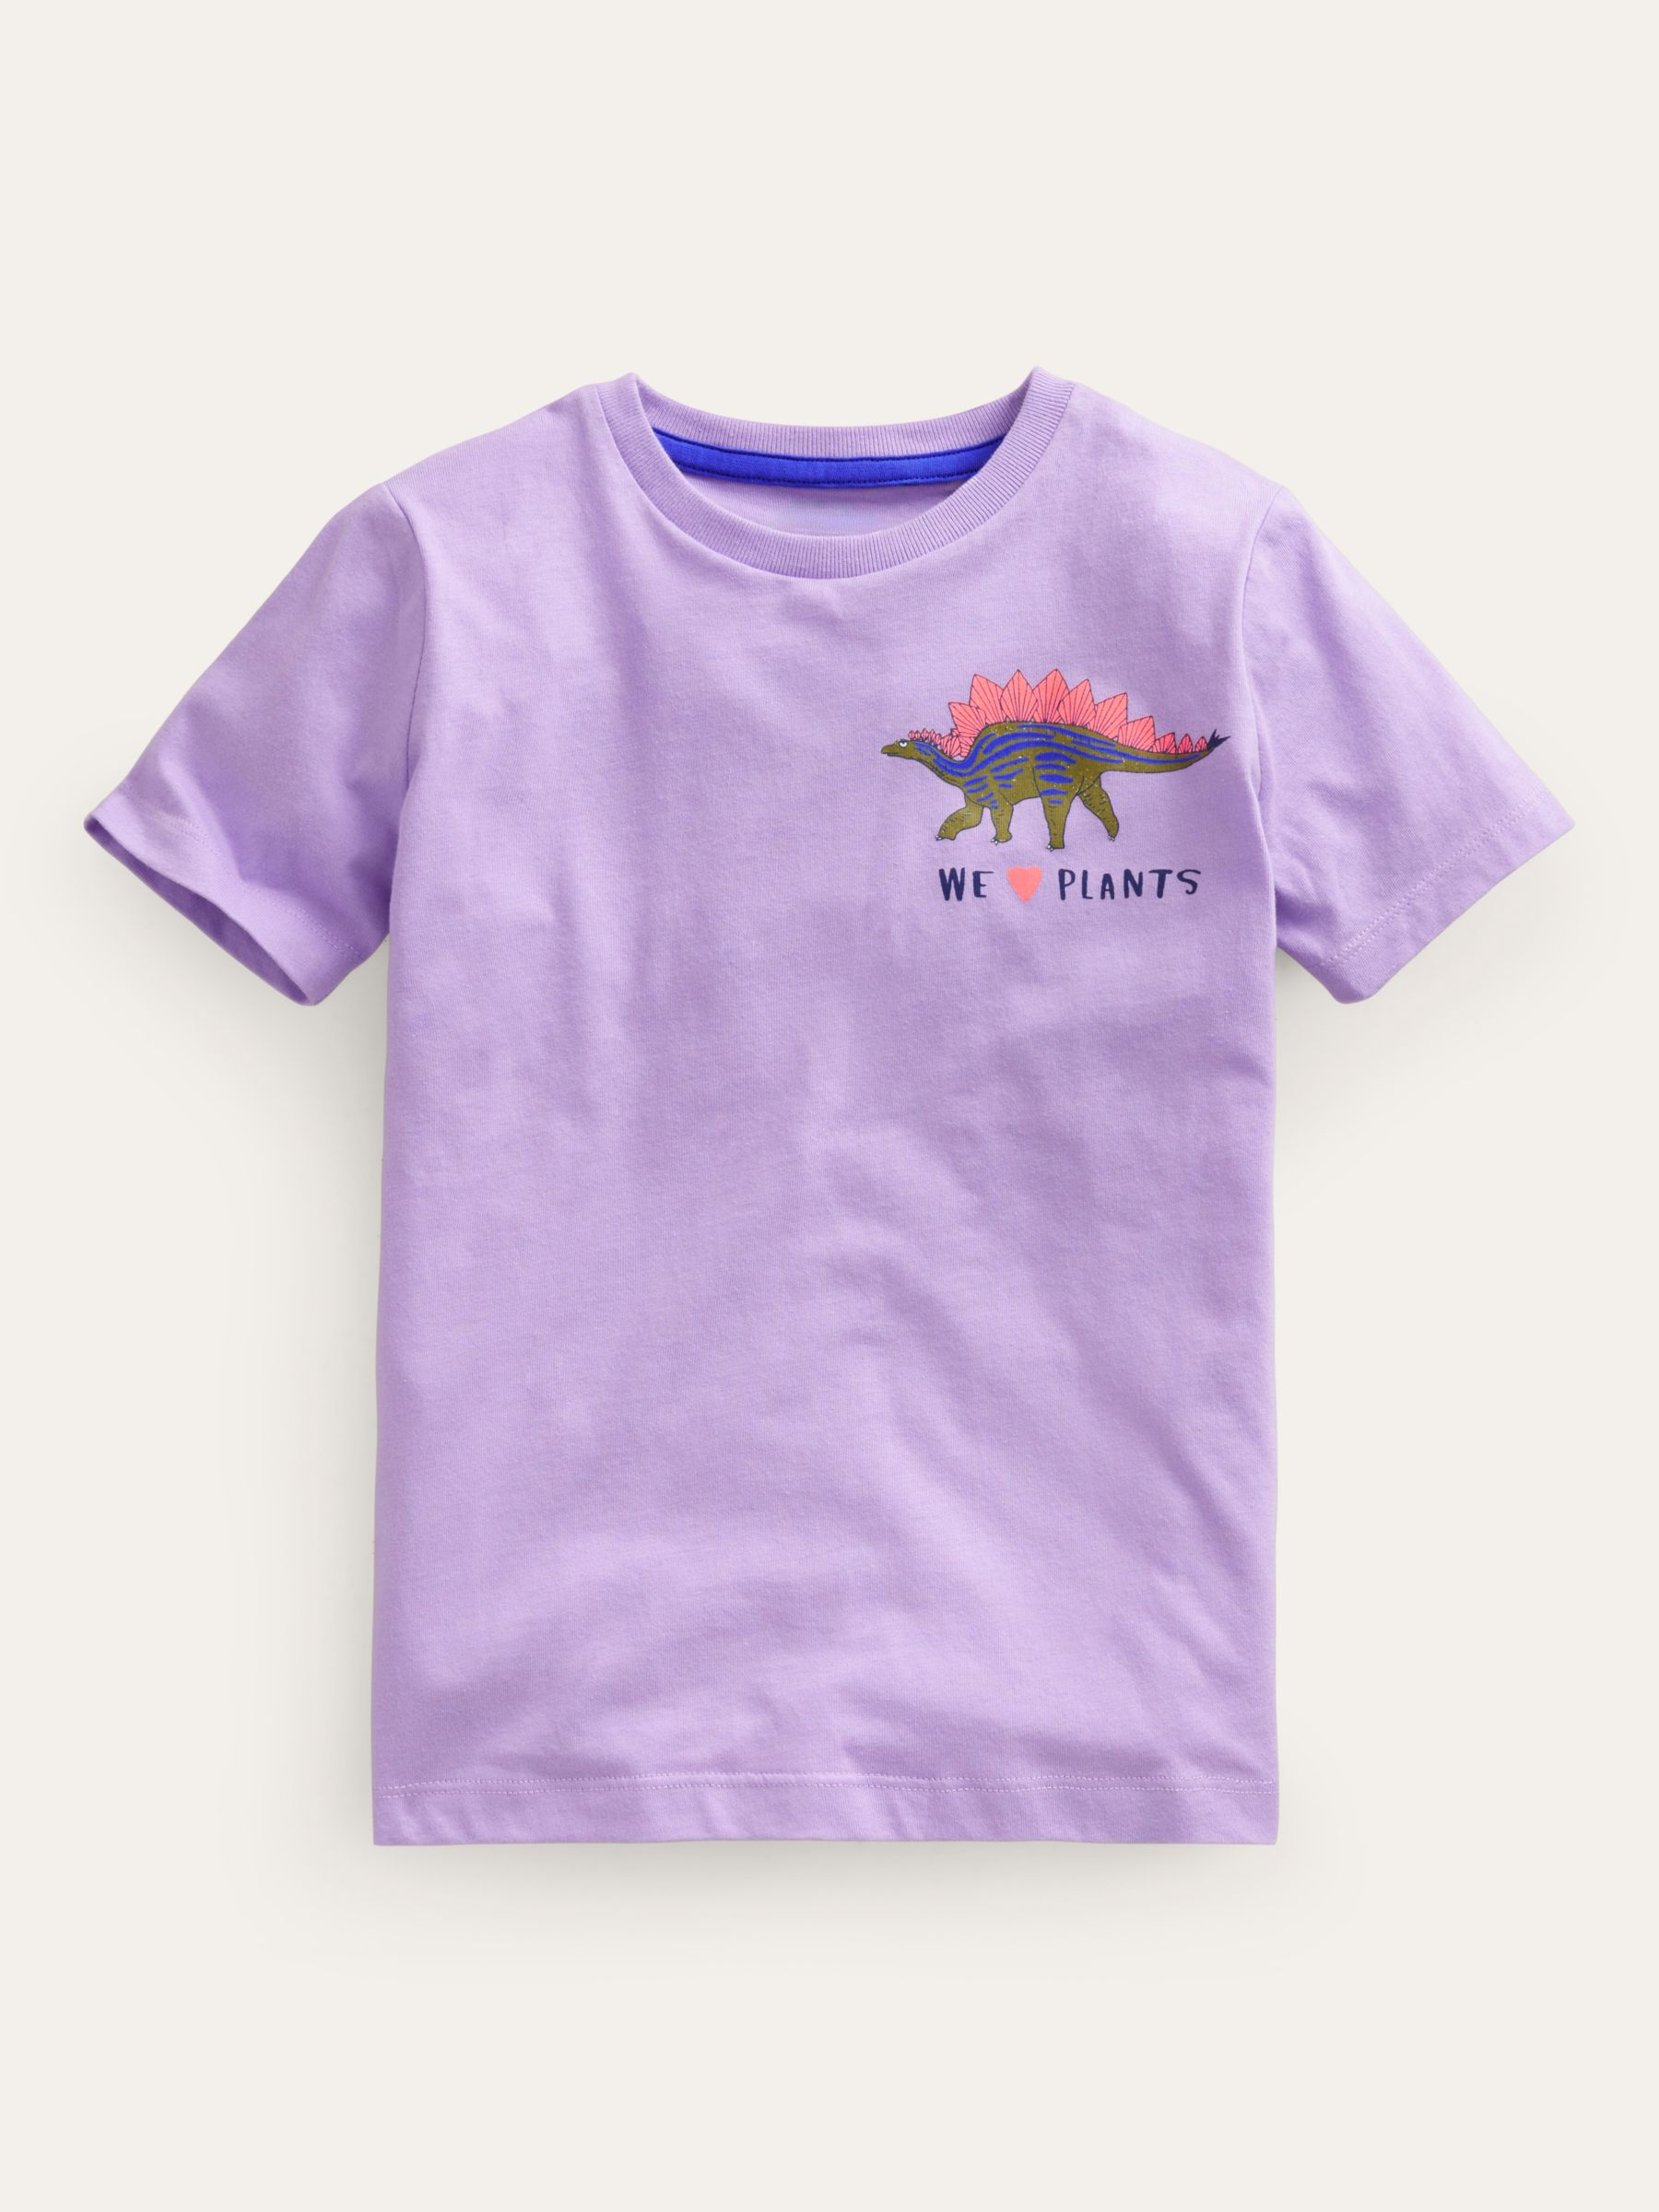 Mini Boden Kids' Dinosaur Front & Back Print T-Shirt, Misty Lavender, 9-10Y